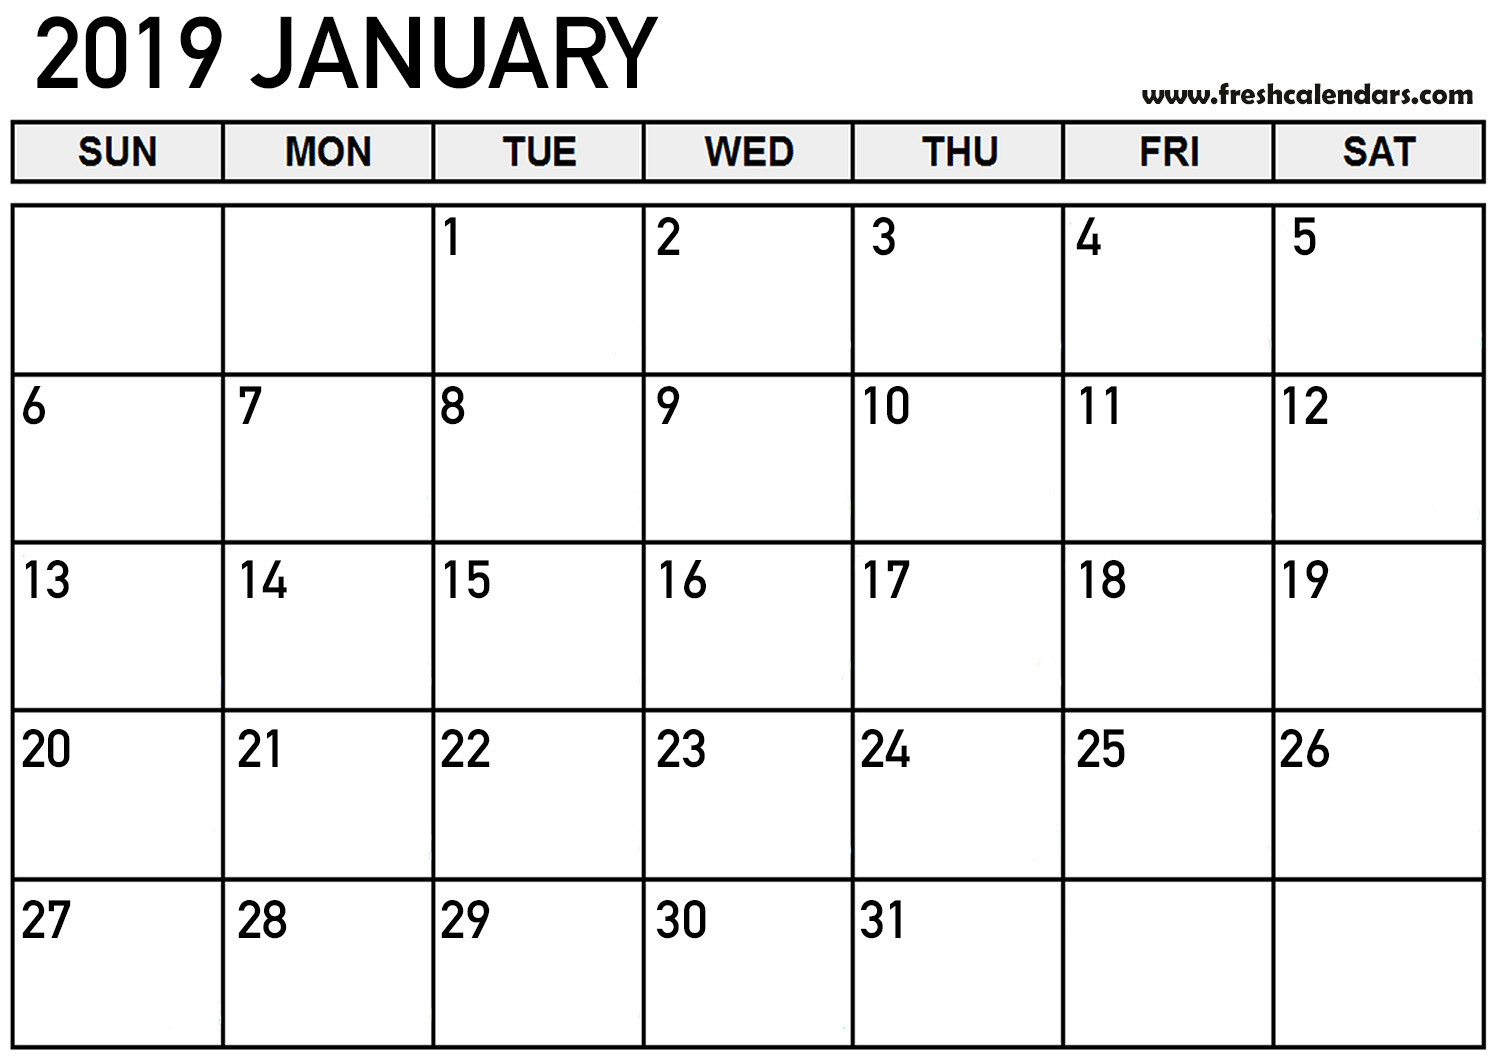 jan 2019 calendars